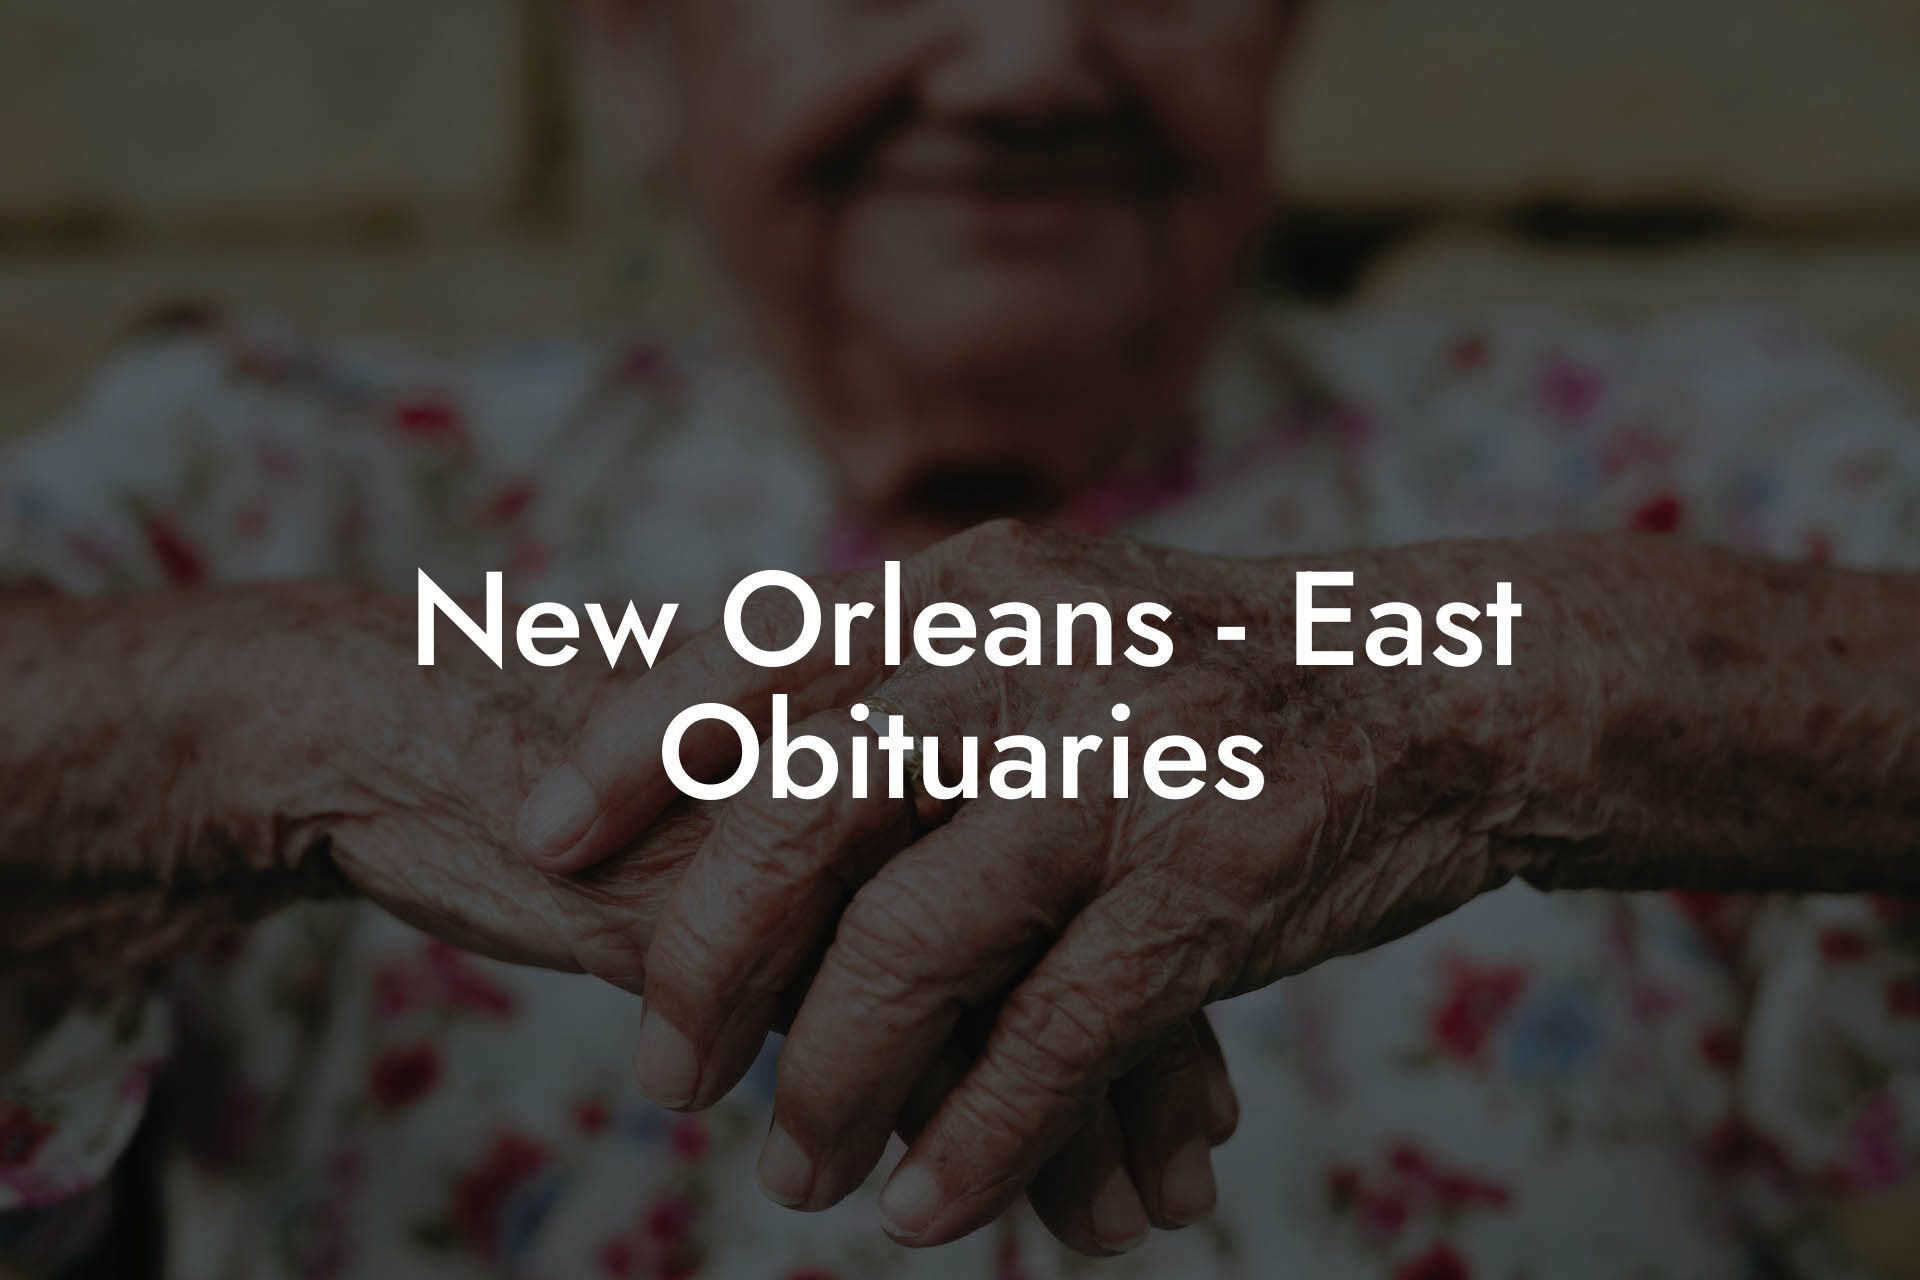 New Orleans - East Obituaries